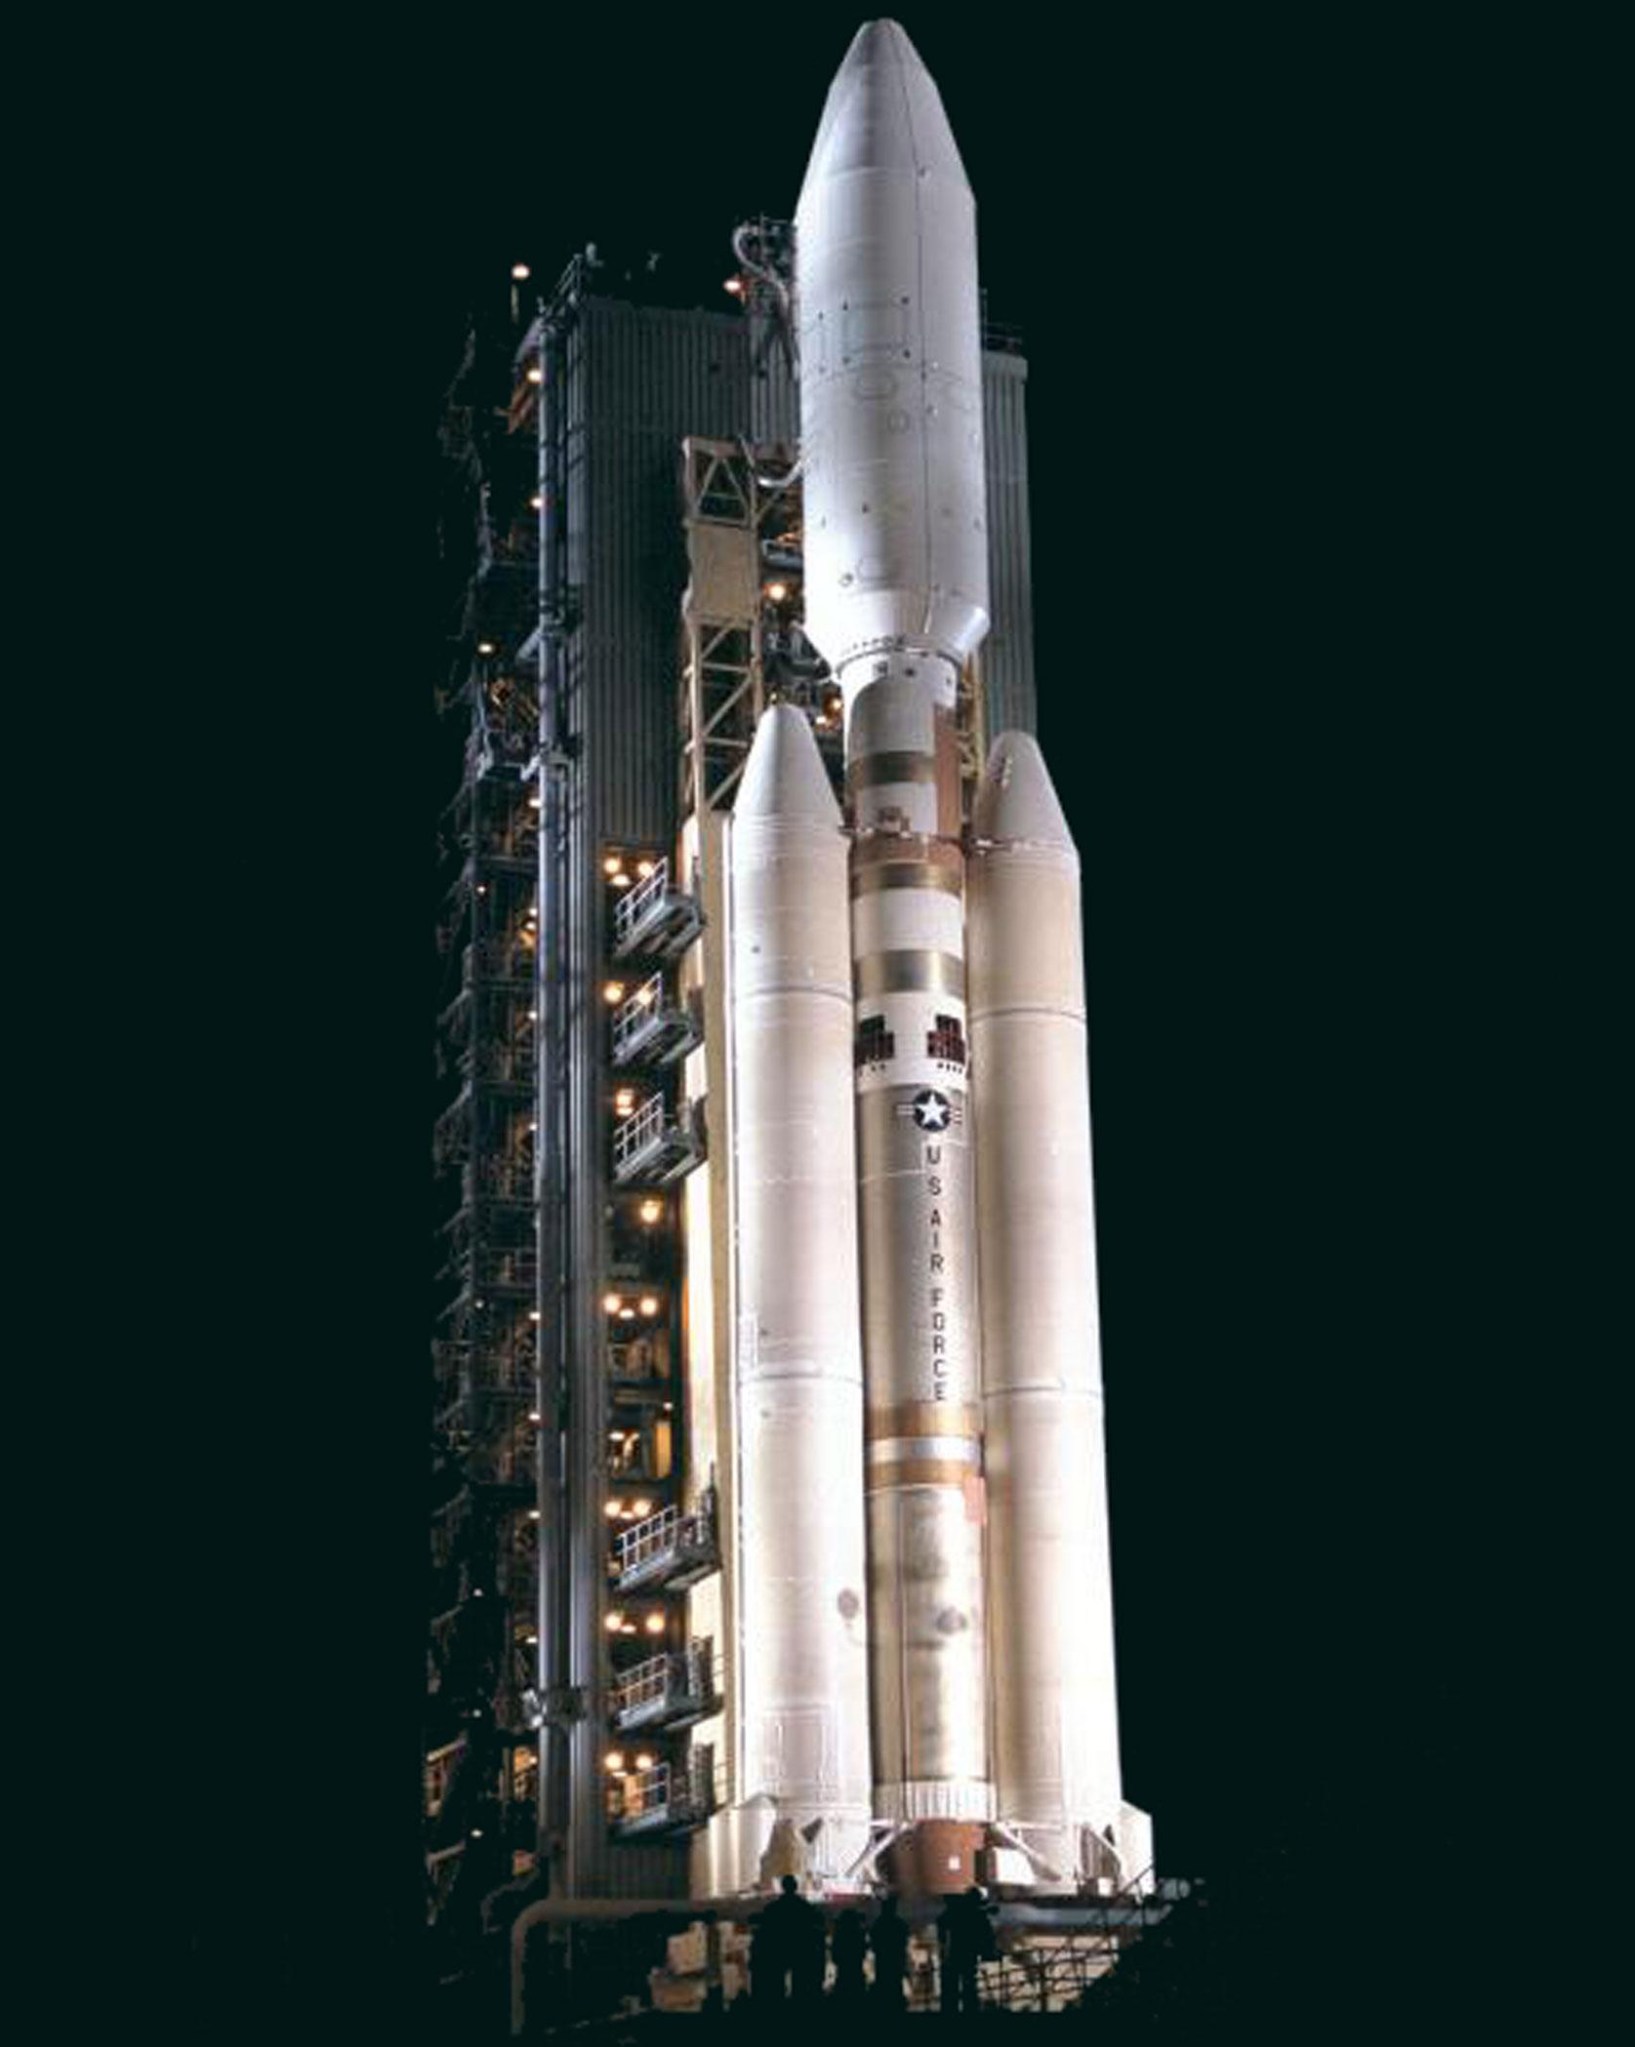 Rocket on launch pad at night.